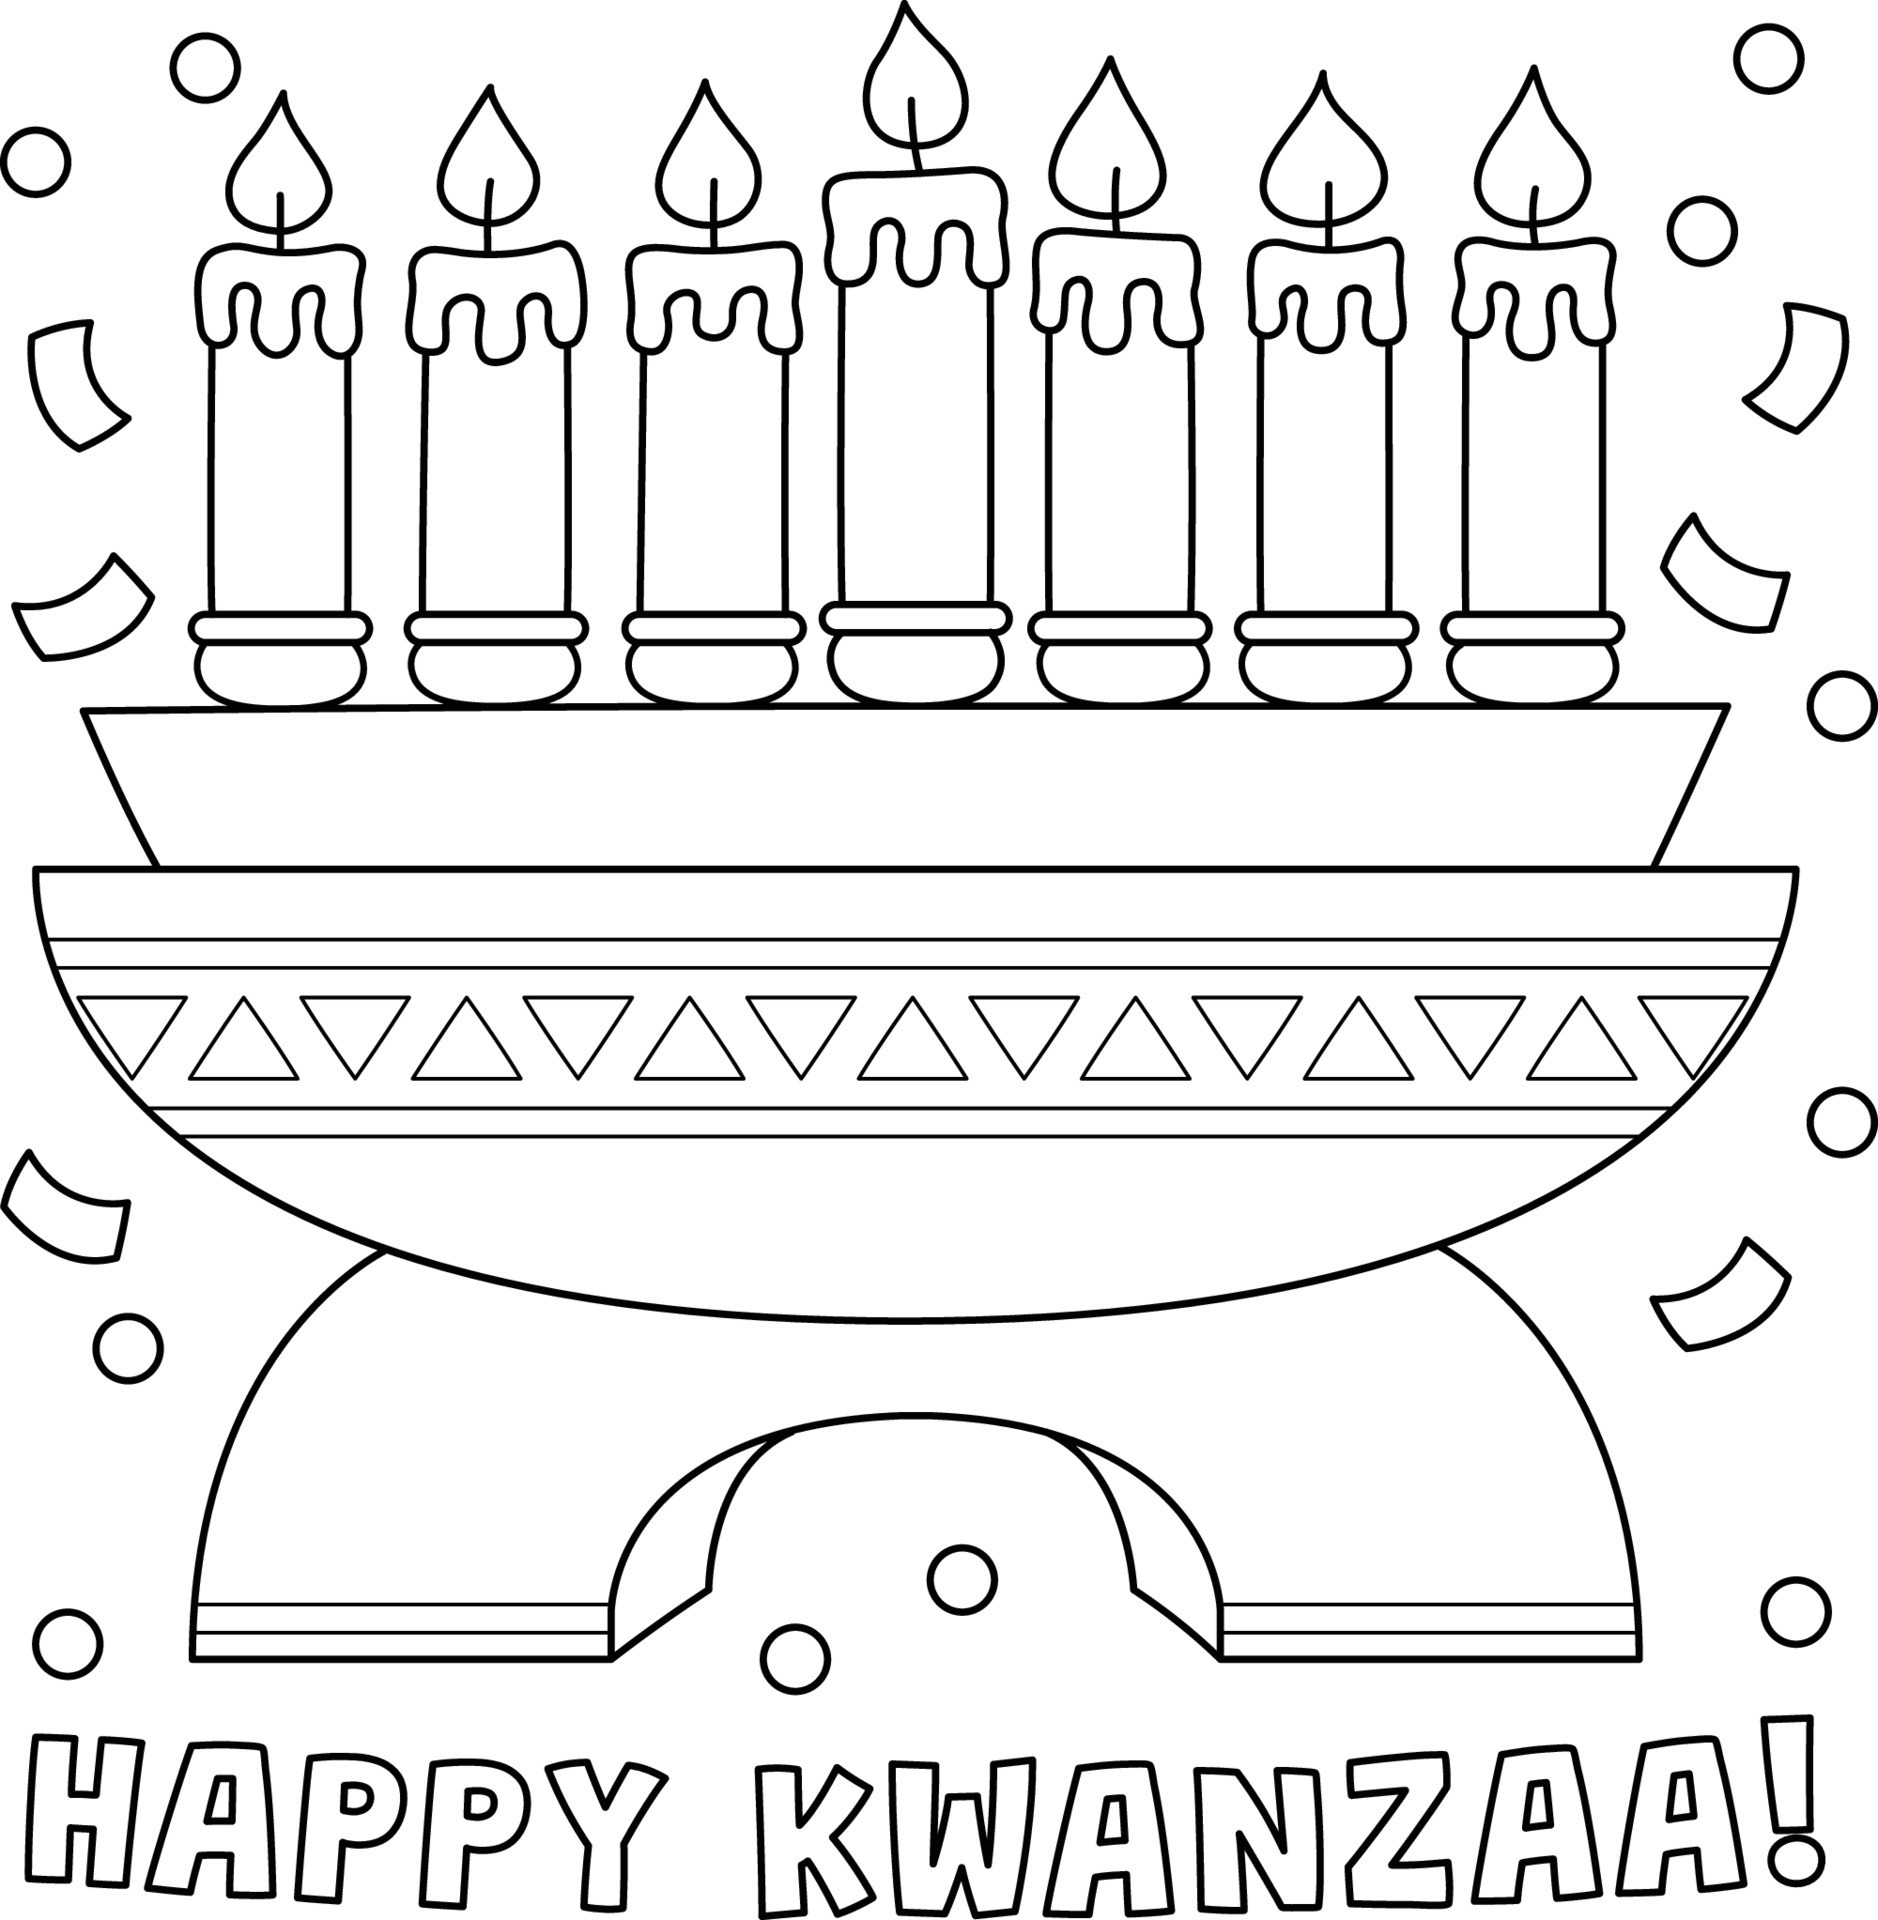 Kwanzaa Coloring Sheet Free Printable